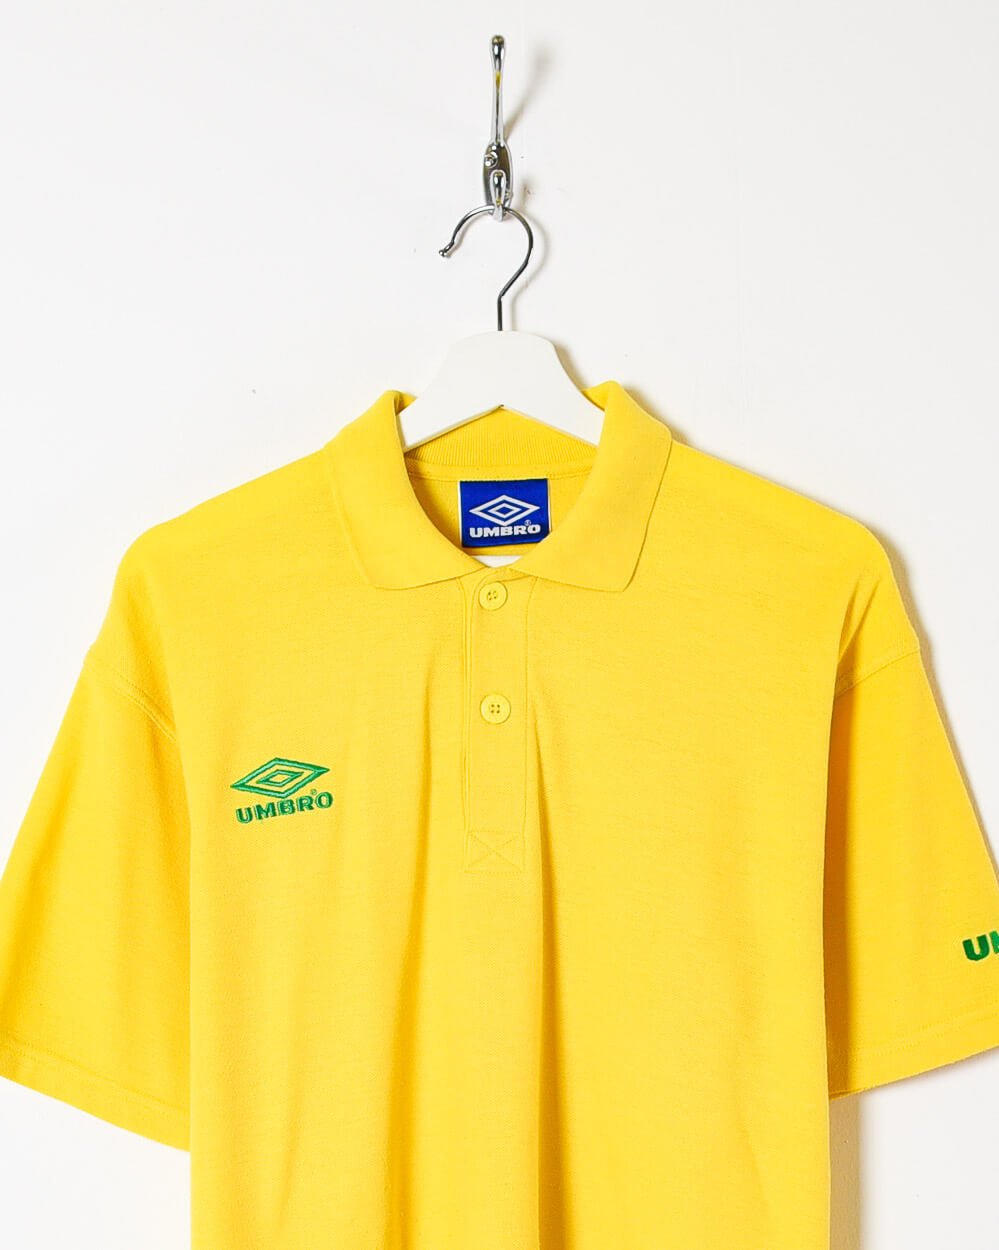 Yellow Umbro Polo Shirt - Medium